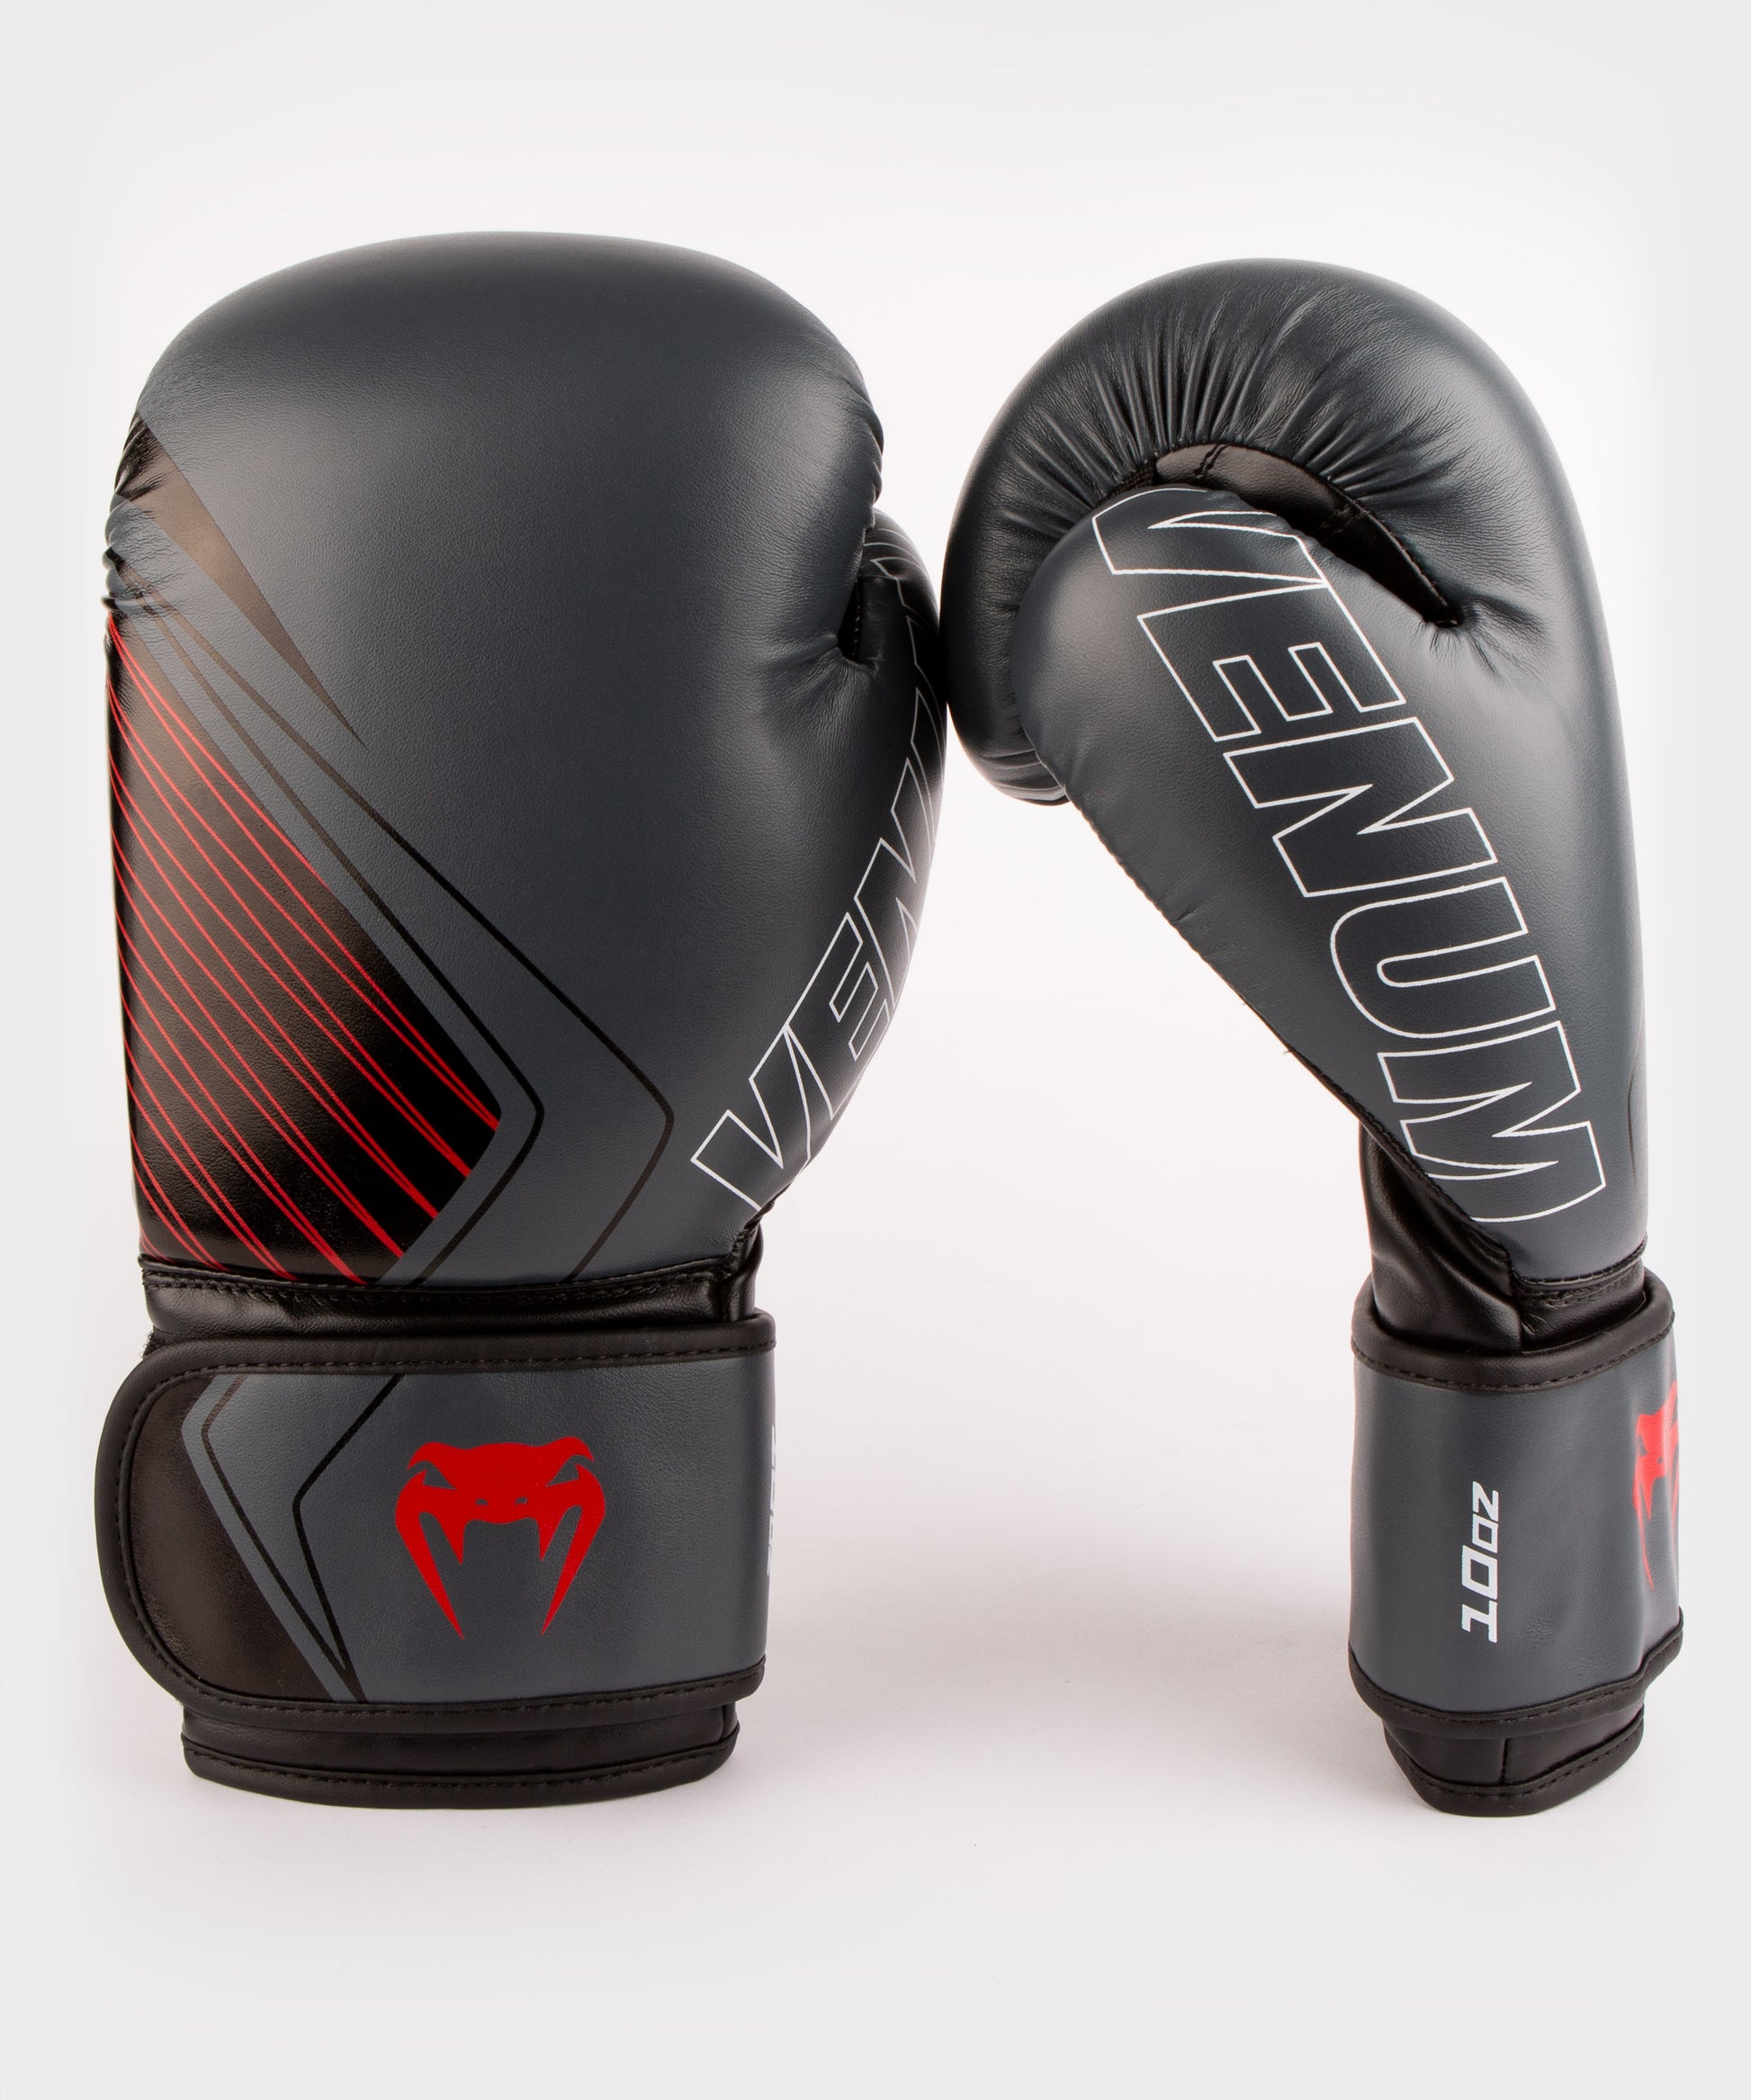 Metal Boxe Boxing Gloves